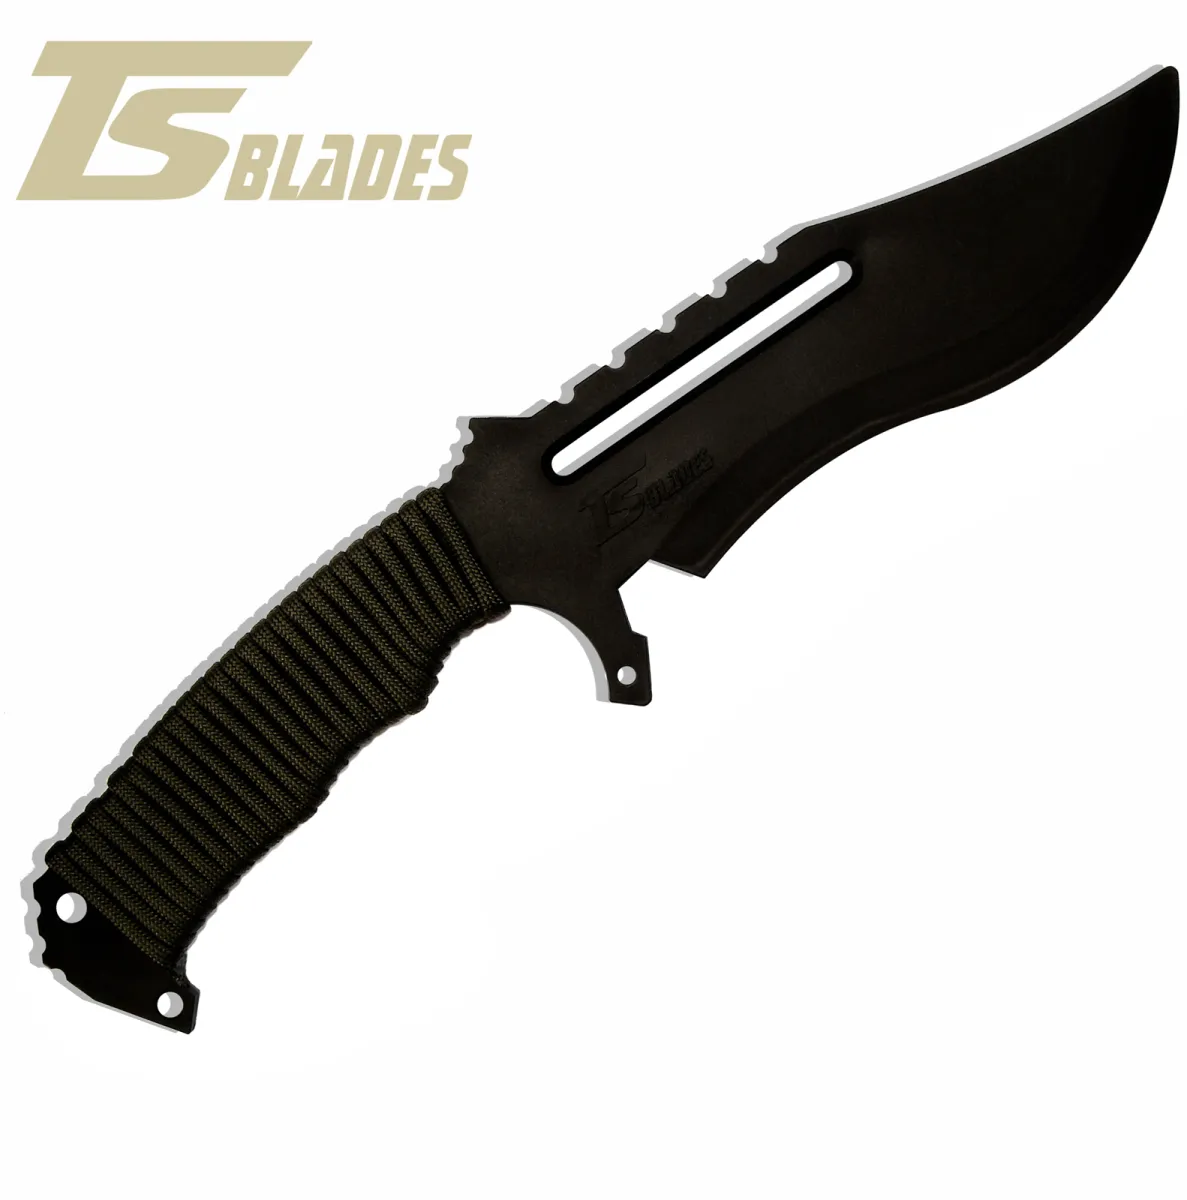 TS BLADES RAPTOR G3 GRIP BLACK PARACORD DUMMY KNIFE